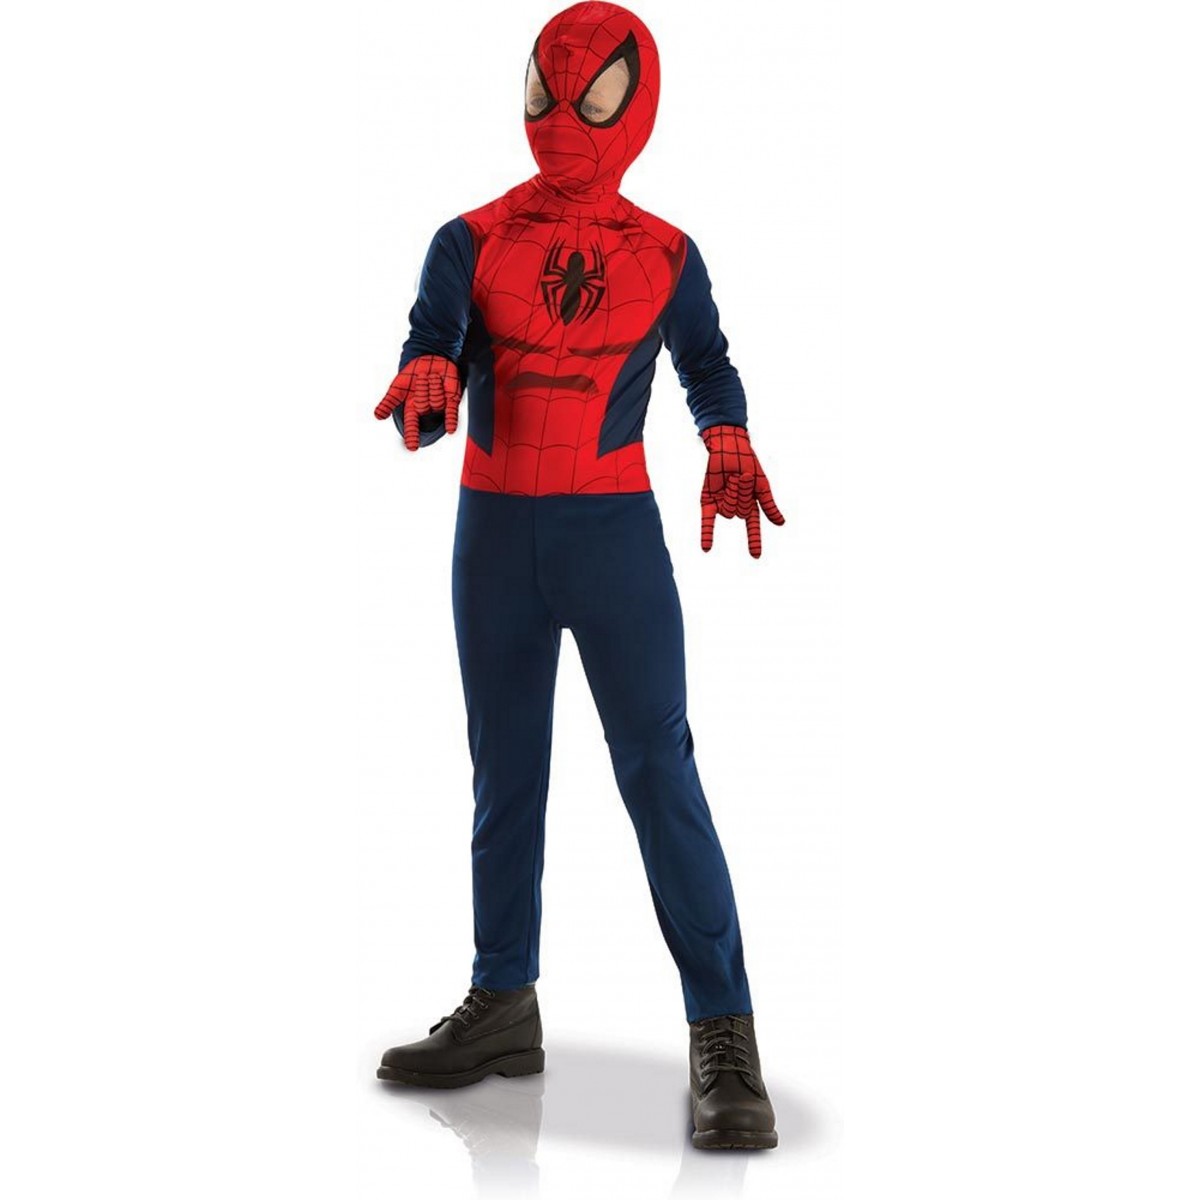 Masque et gant spiderman - Spiderman